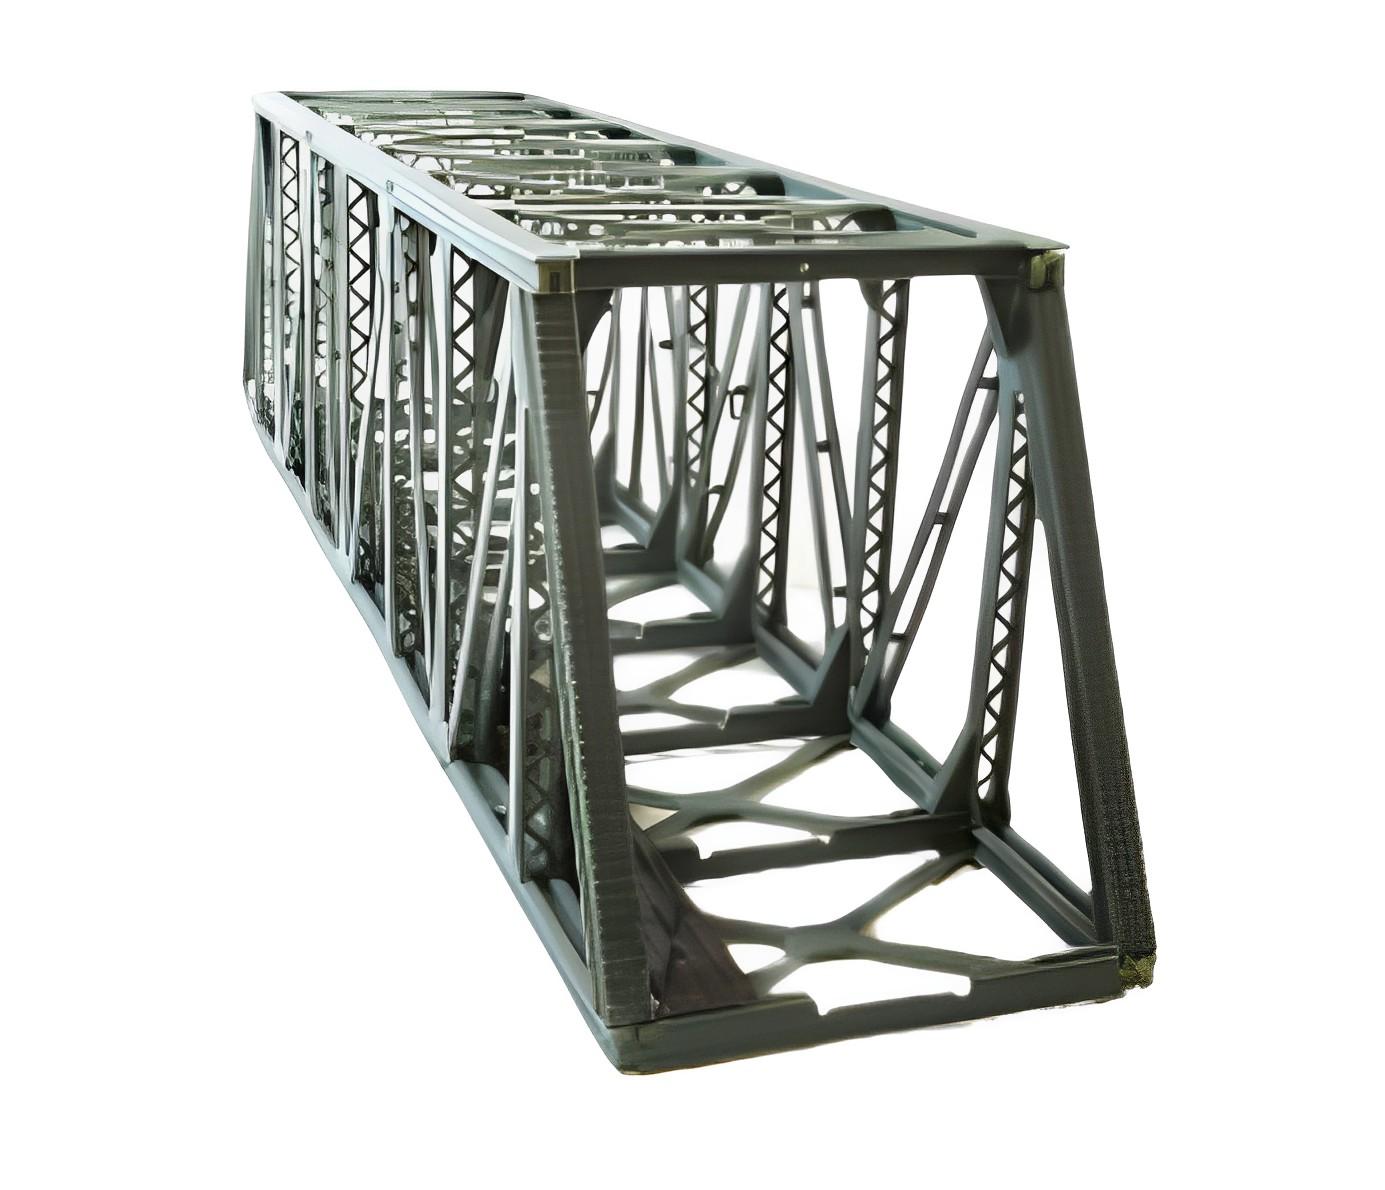 Kalyani Steel Box Type Girder Bridge_0